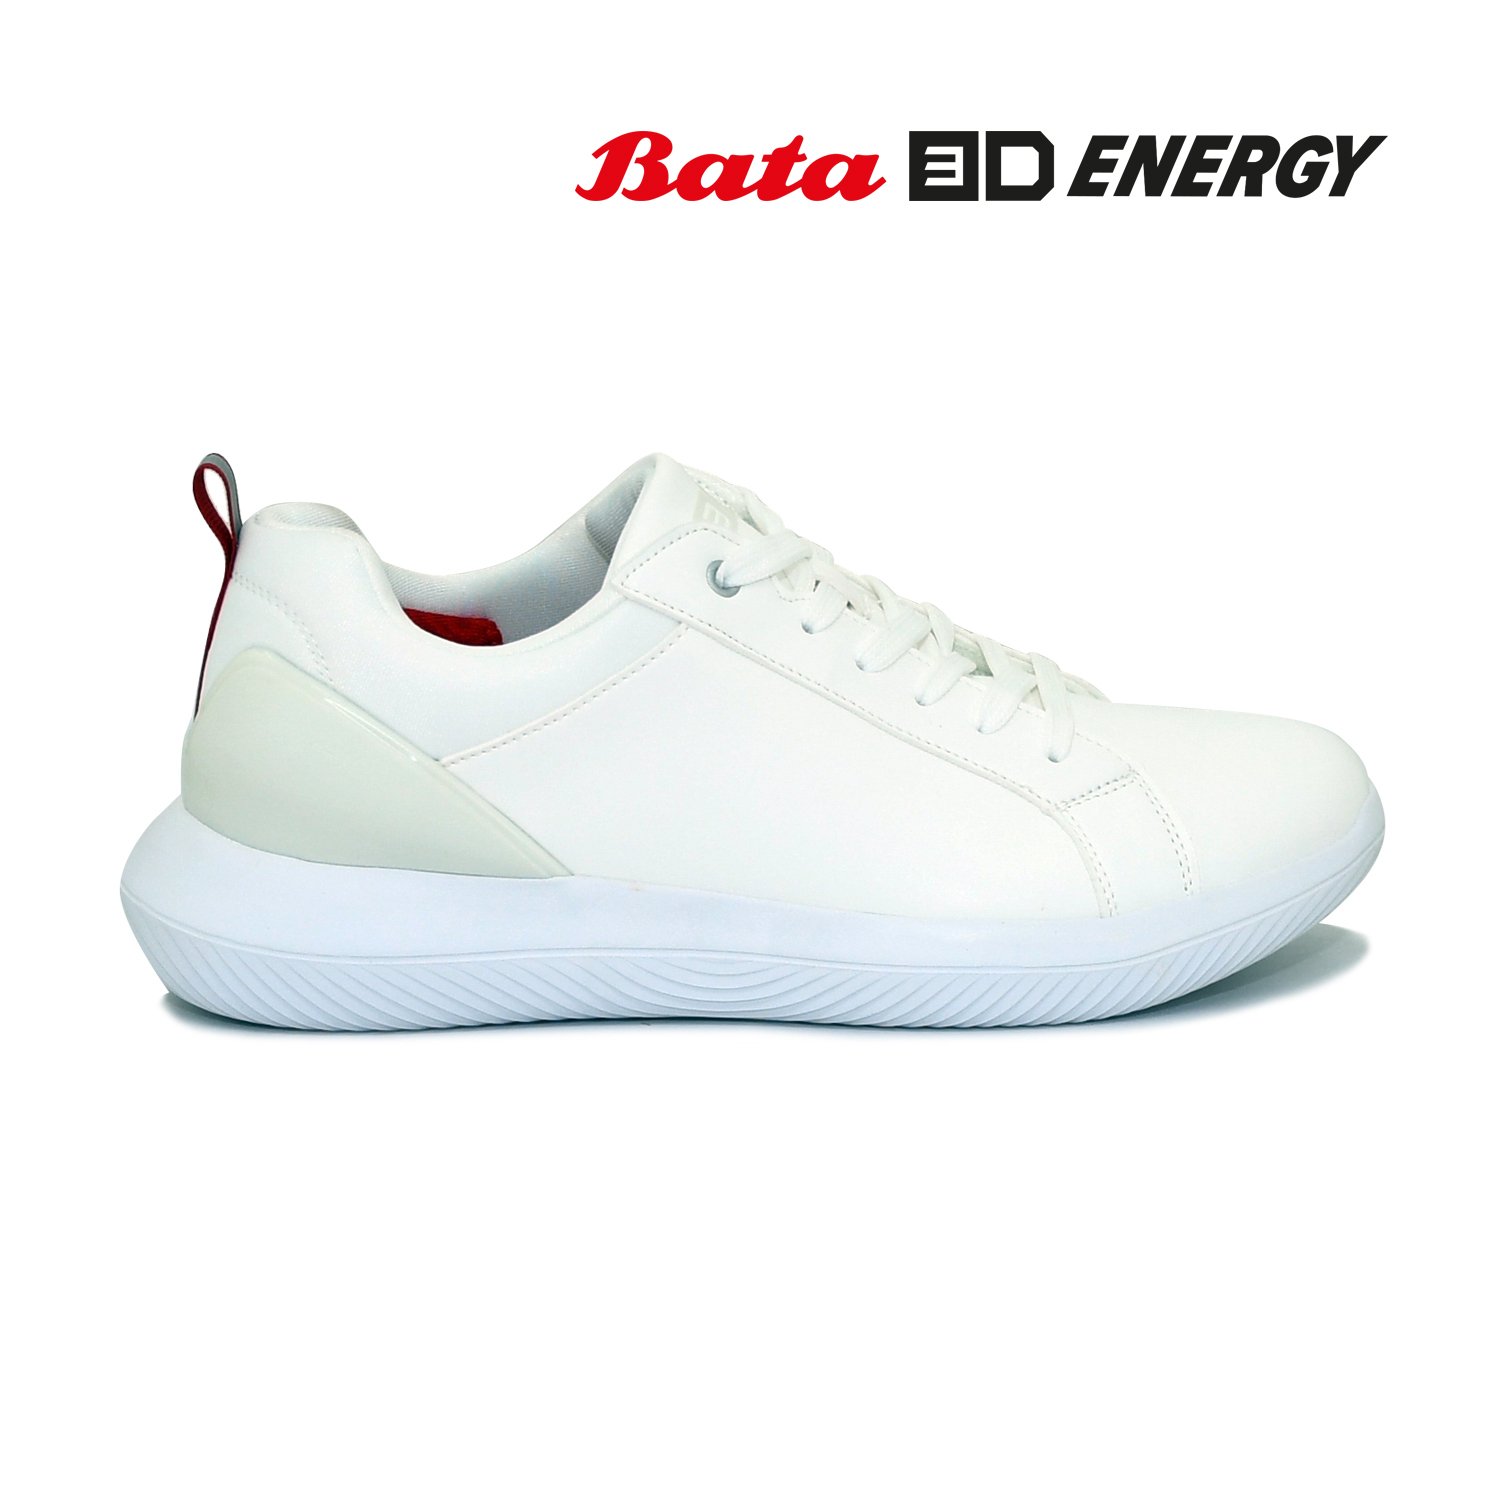 Bata 3D Energy - Men 881-1196